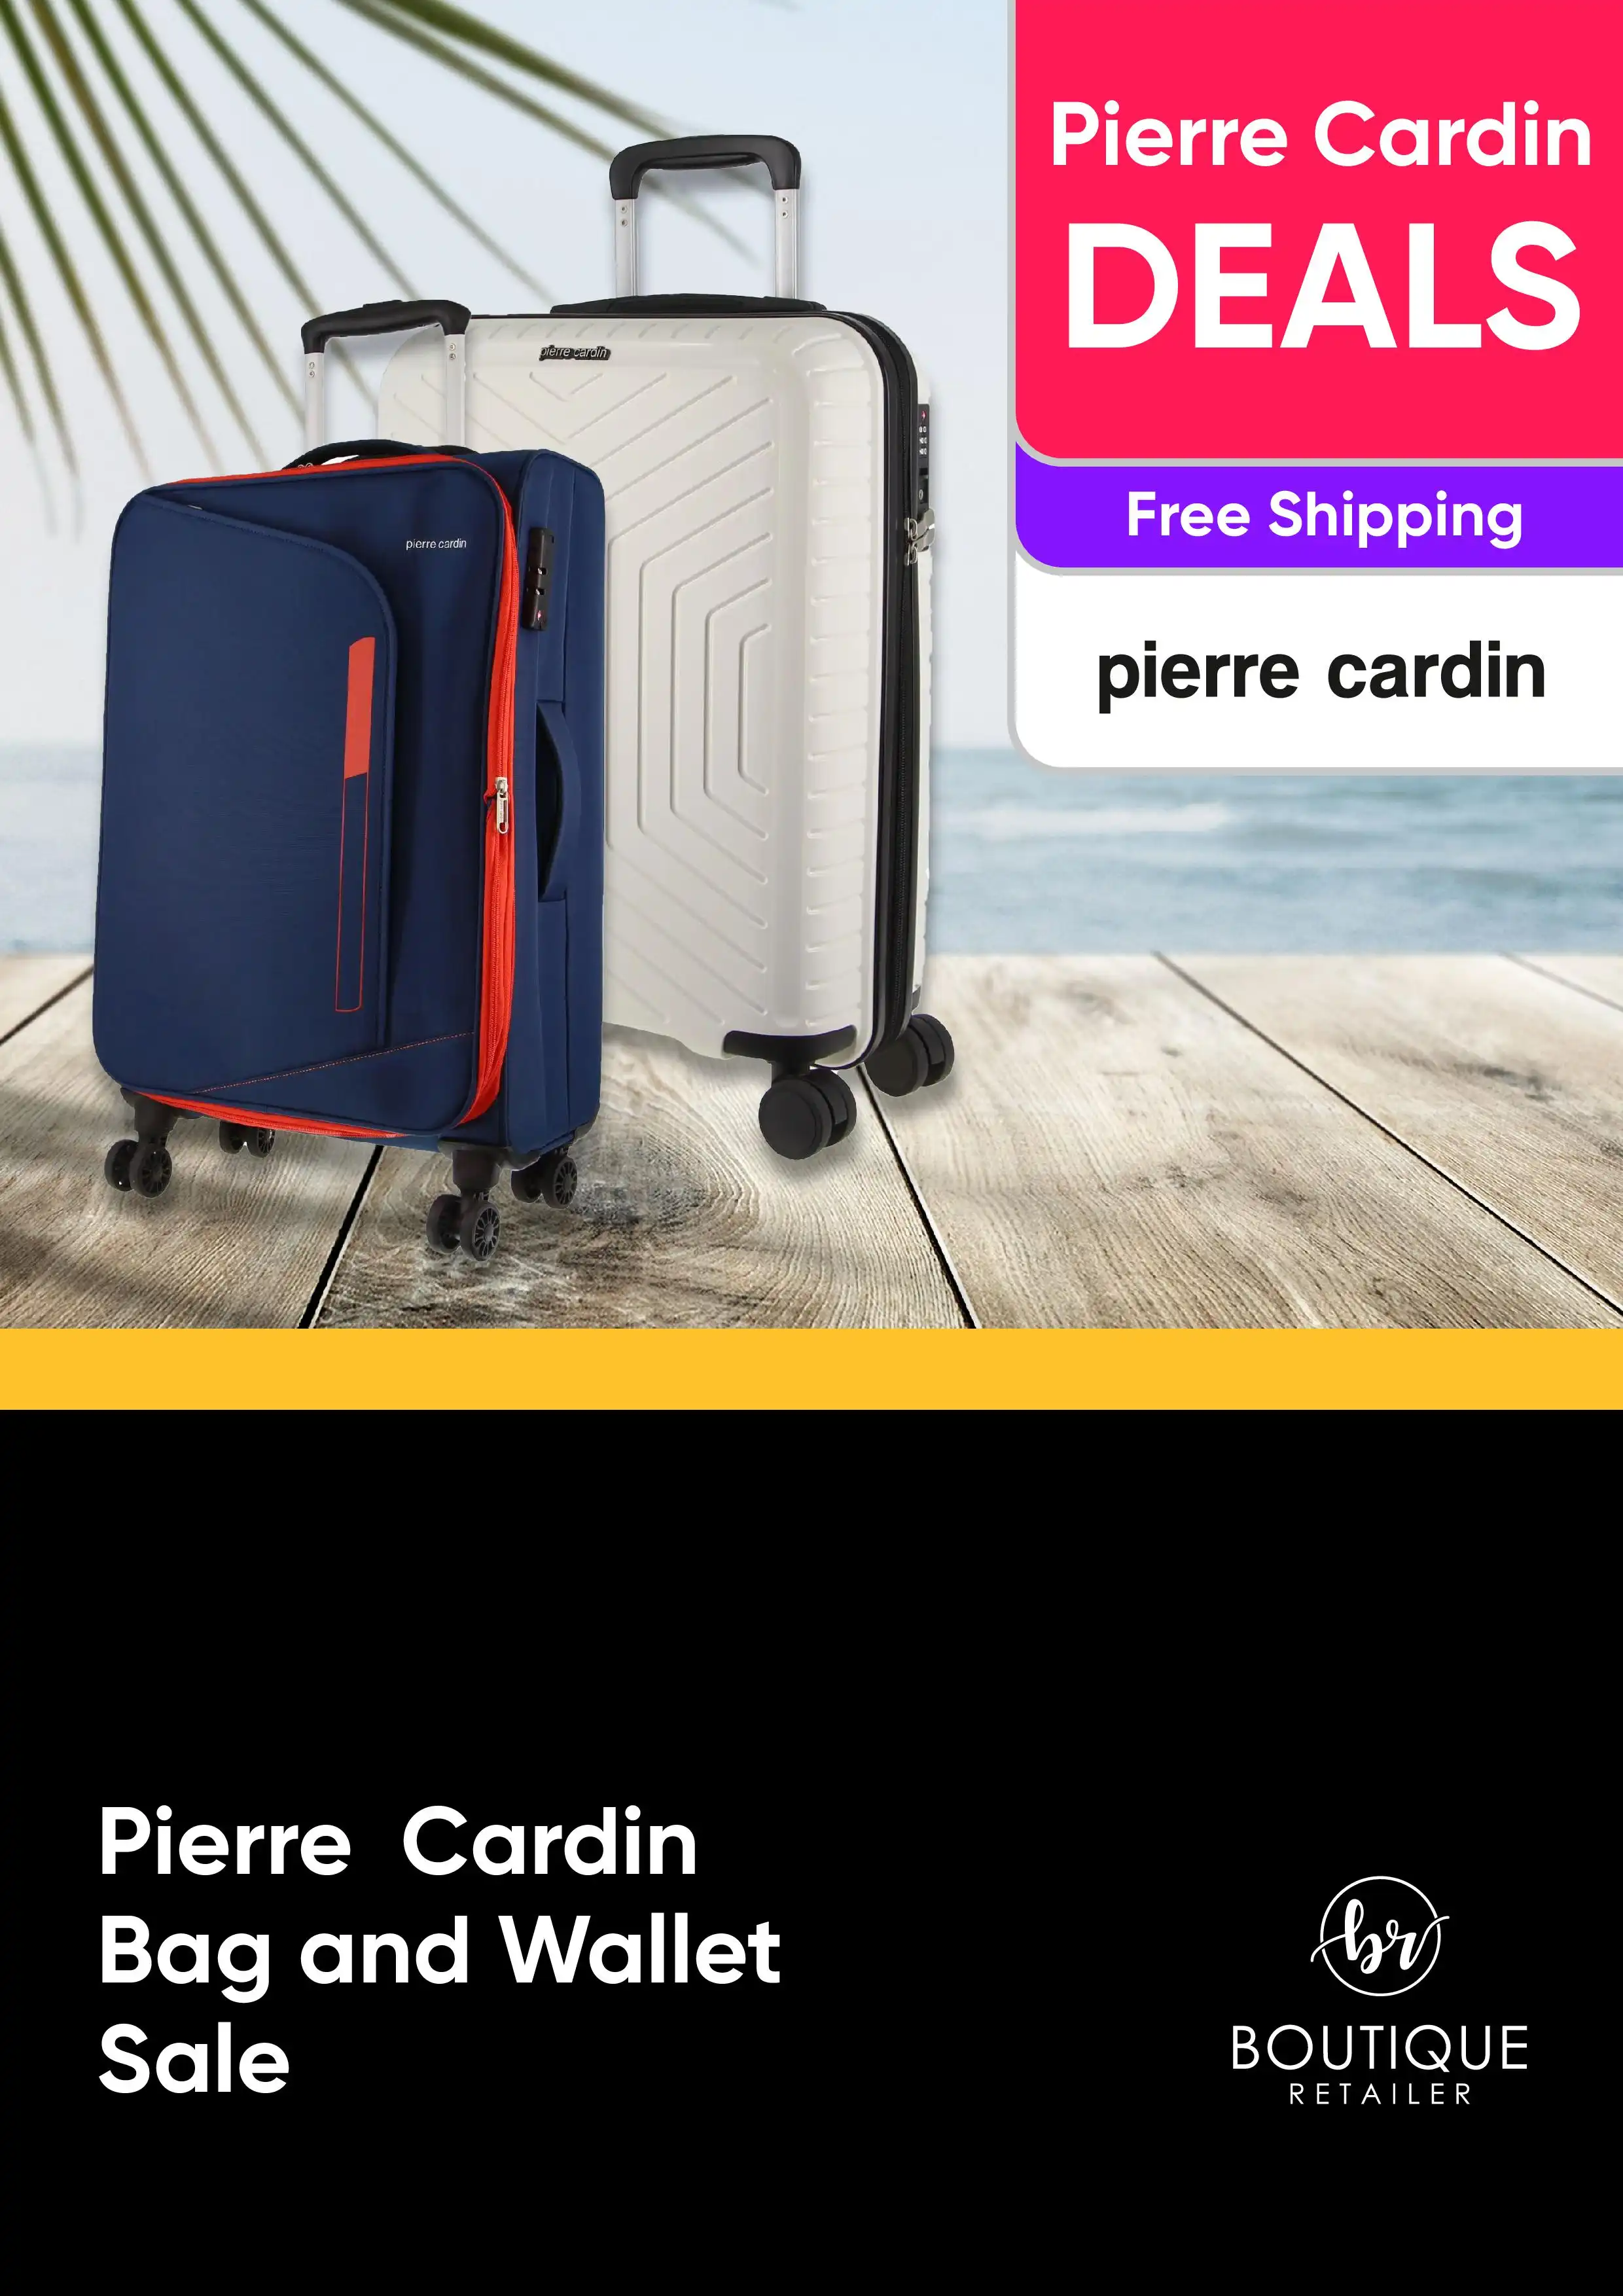 Pierre Cardin Bag and Wallet Sale - Pierre Cardin - Free Shipping